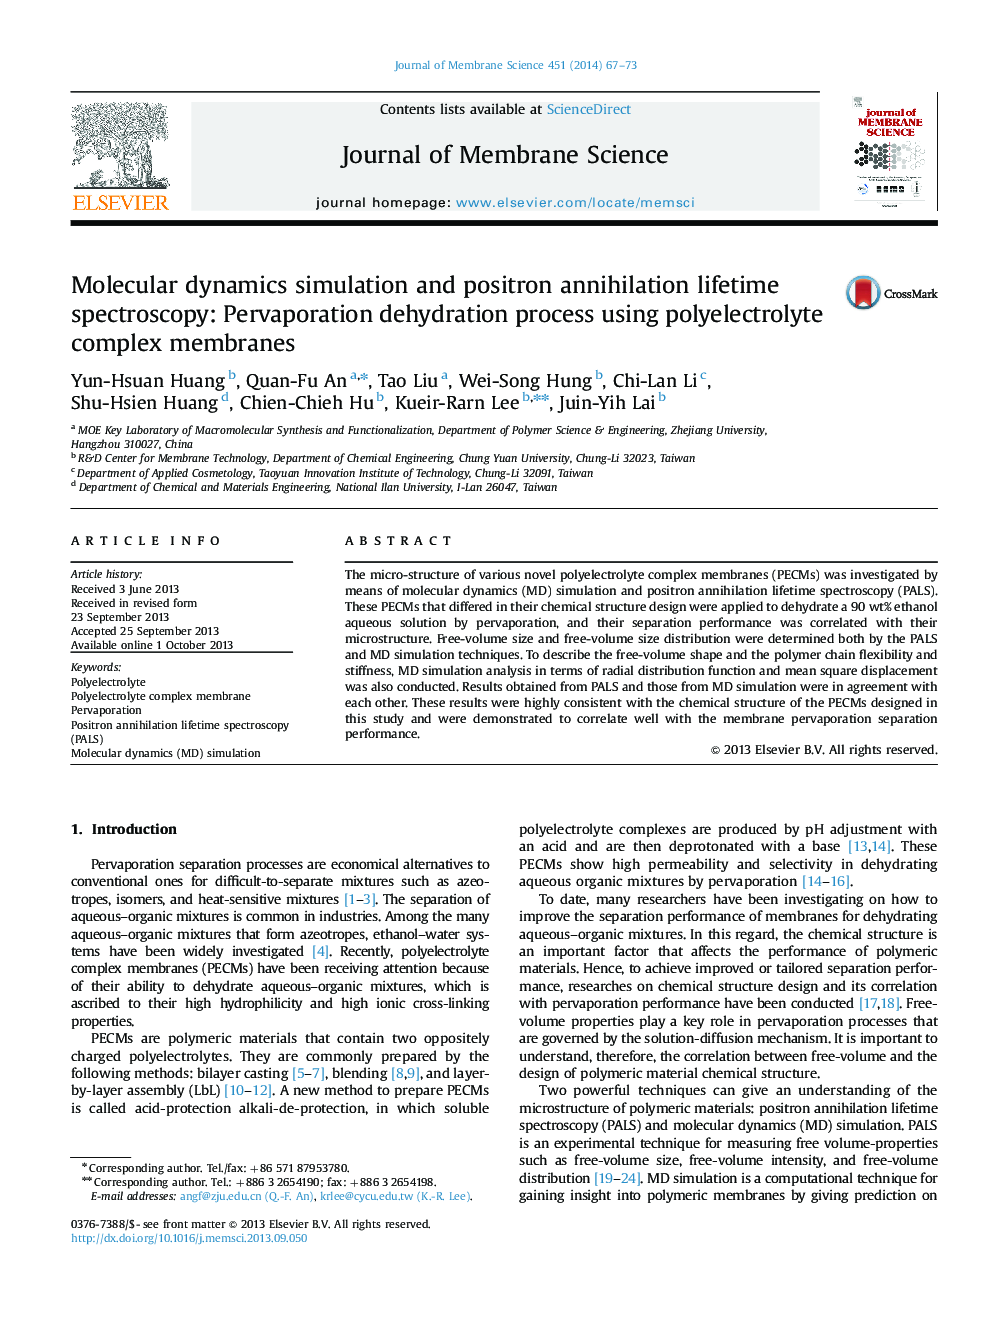 Molecular dynamics simulation and positron annihilation lifetime spectroscopy: Pervaporation dehydration process using polyelectrolyte complex membranes